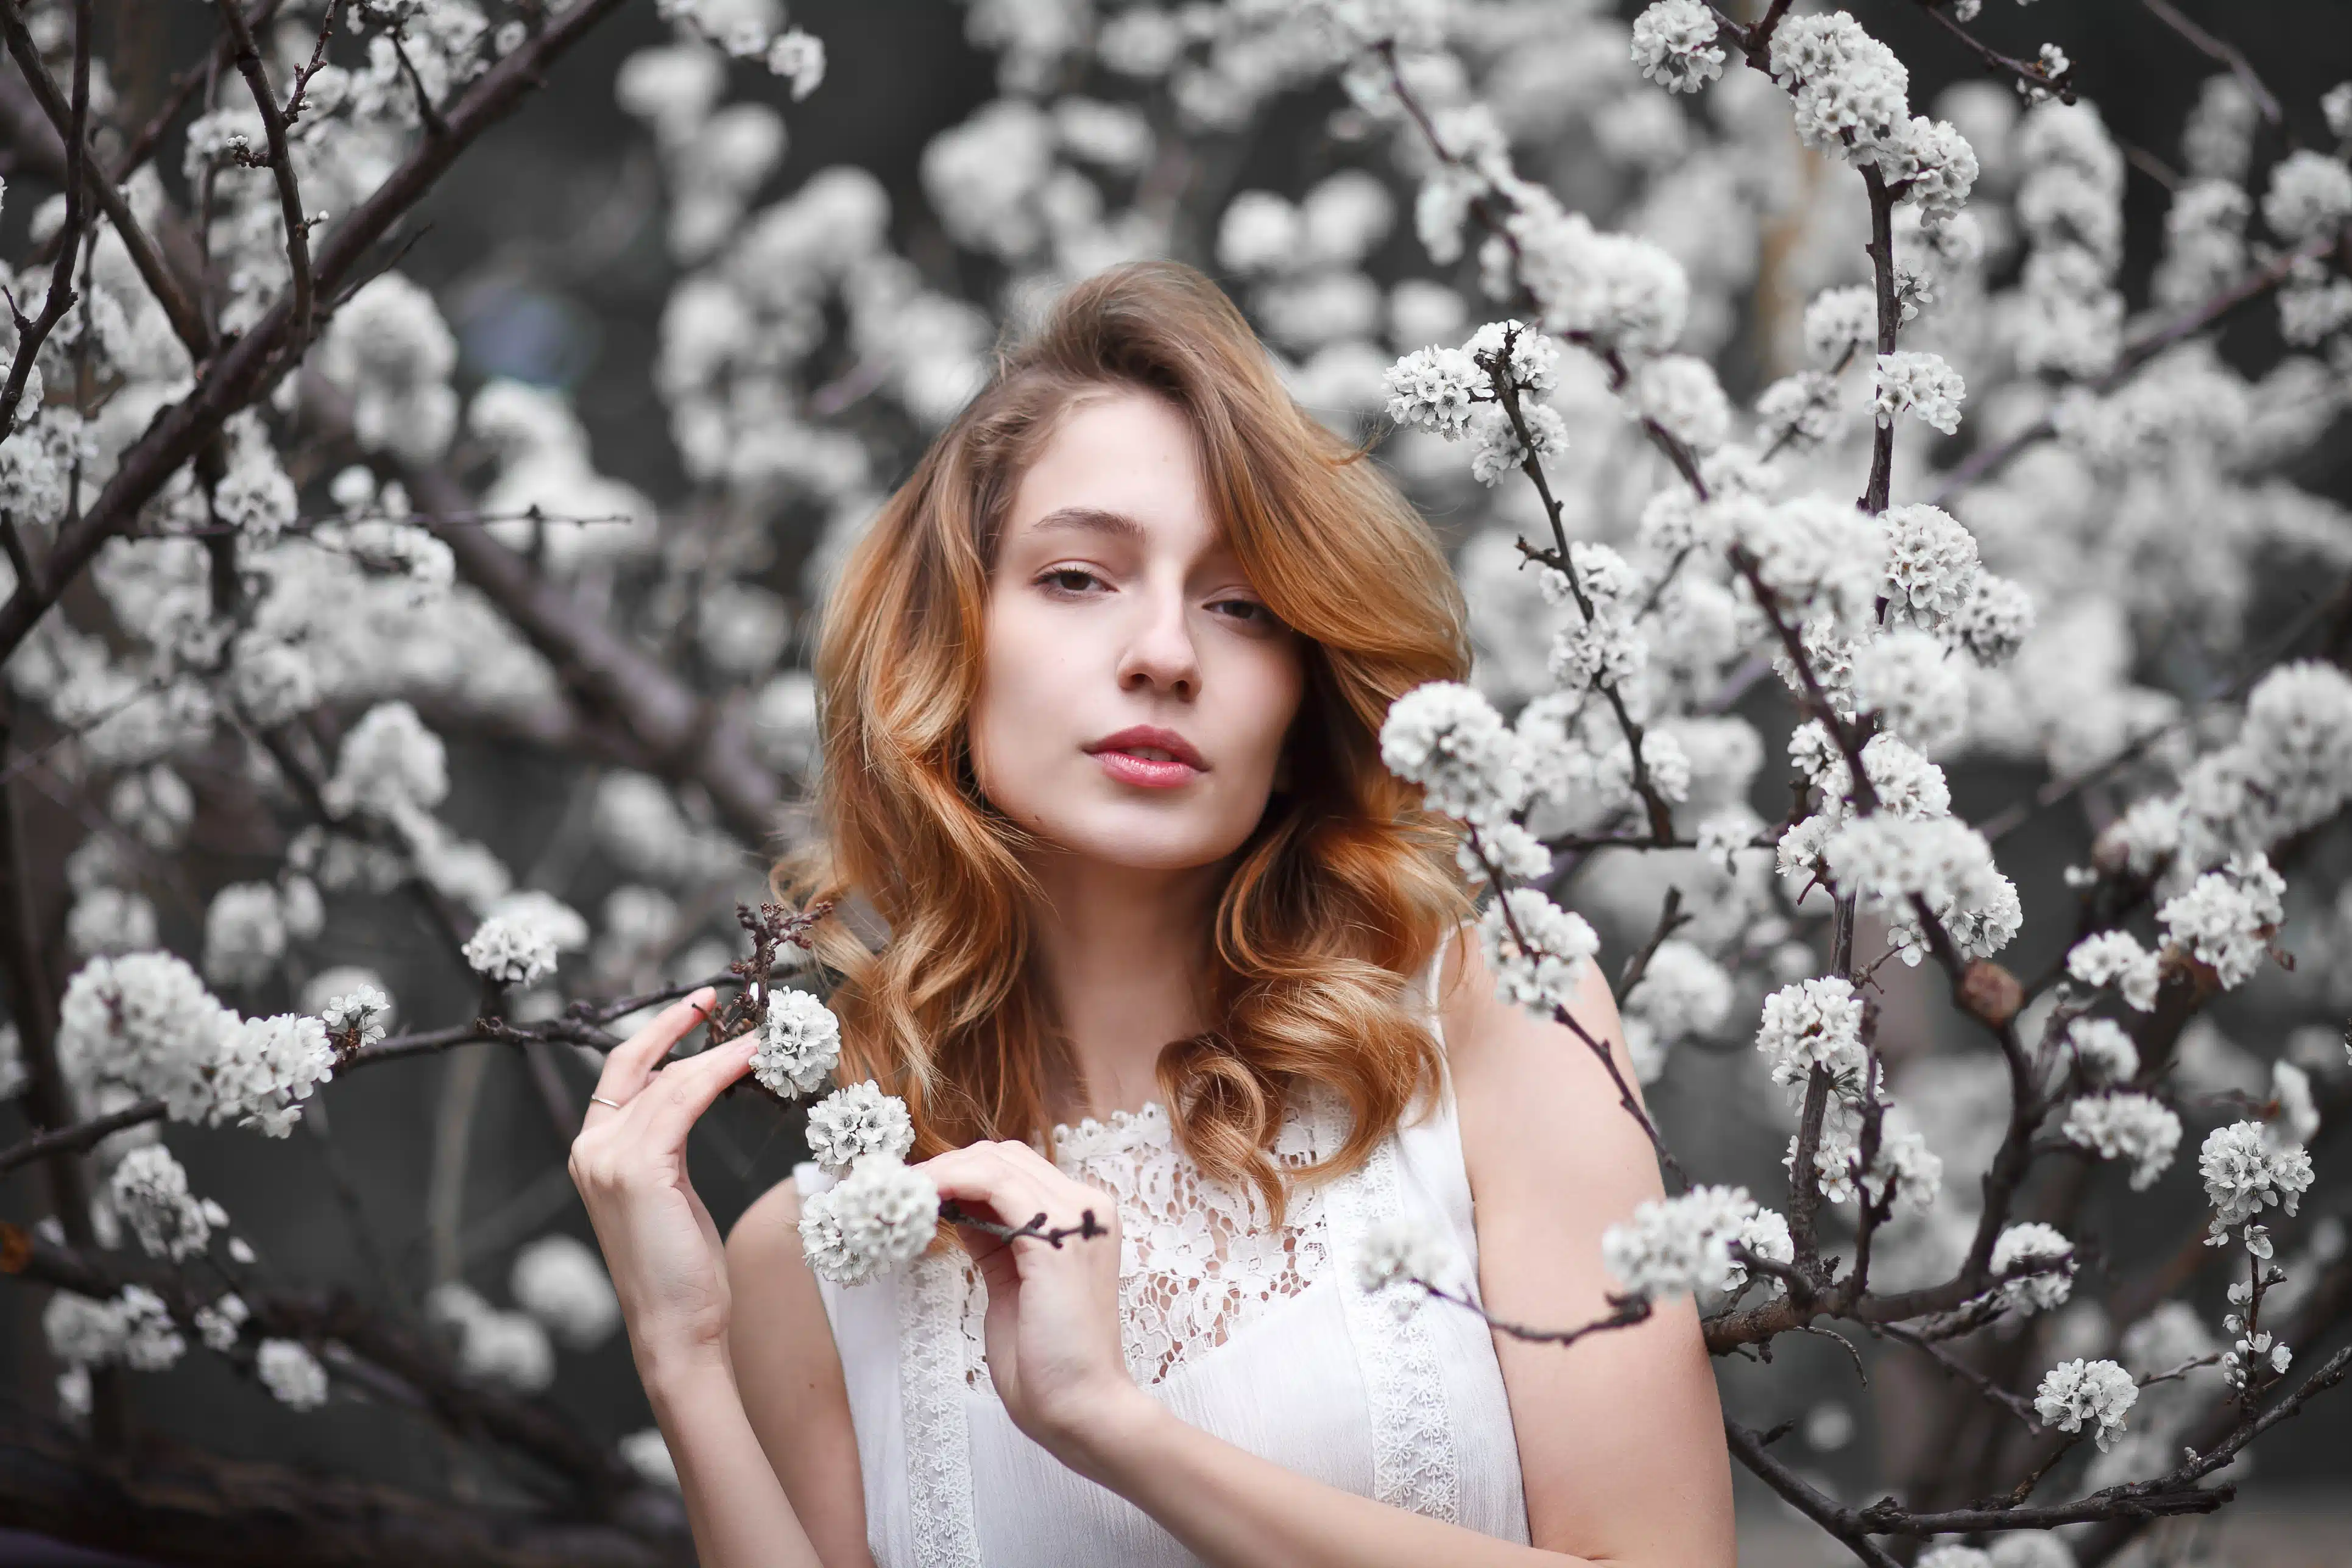 beautiful girl in a white dress walks in the garden, sakura blooms